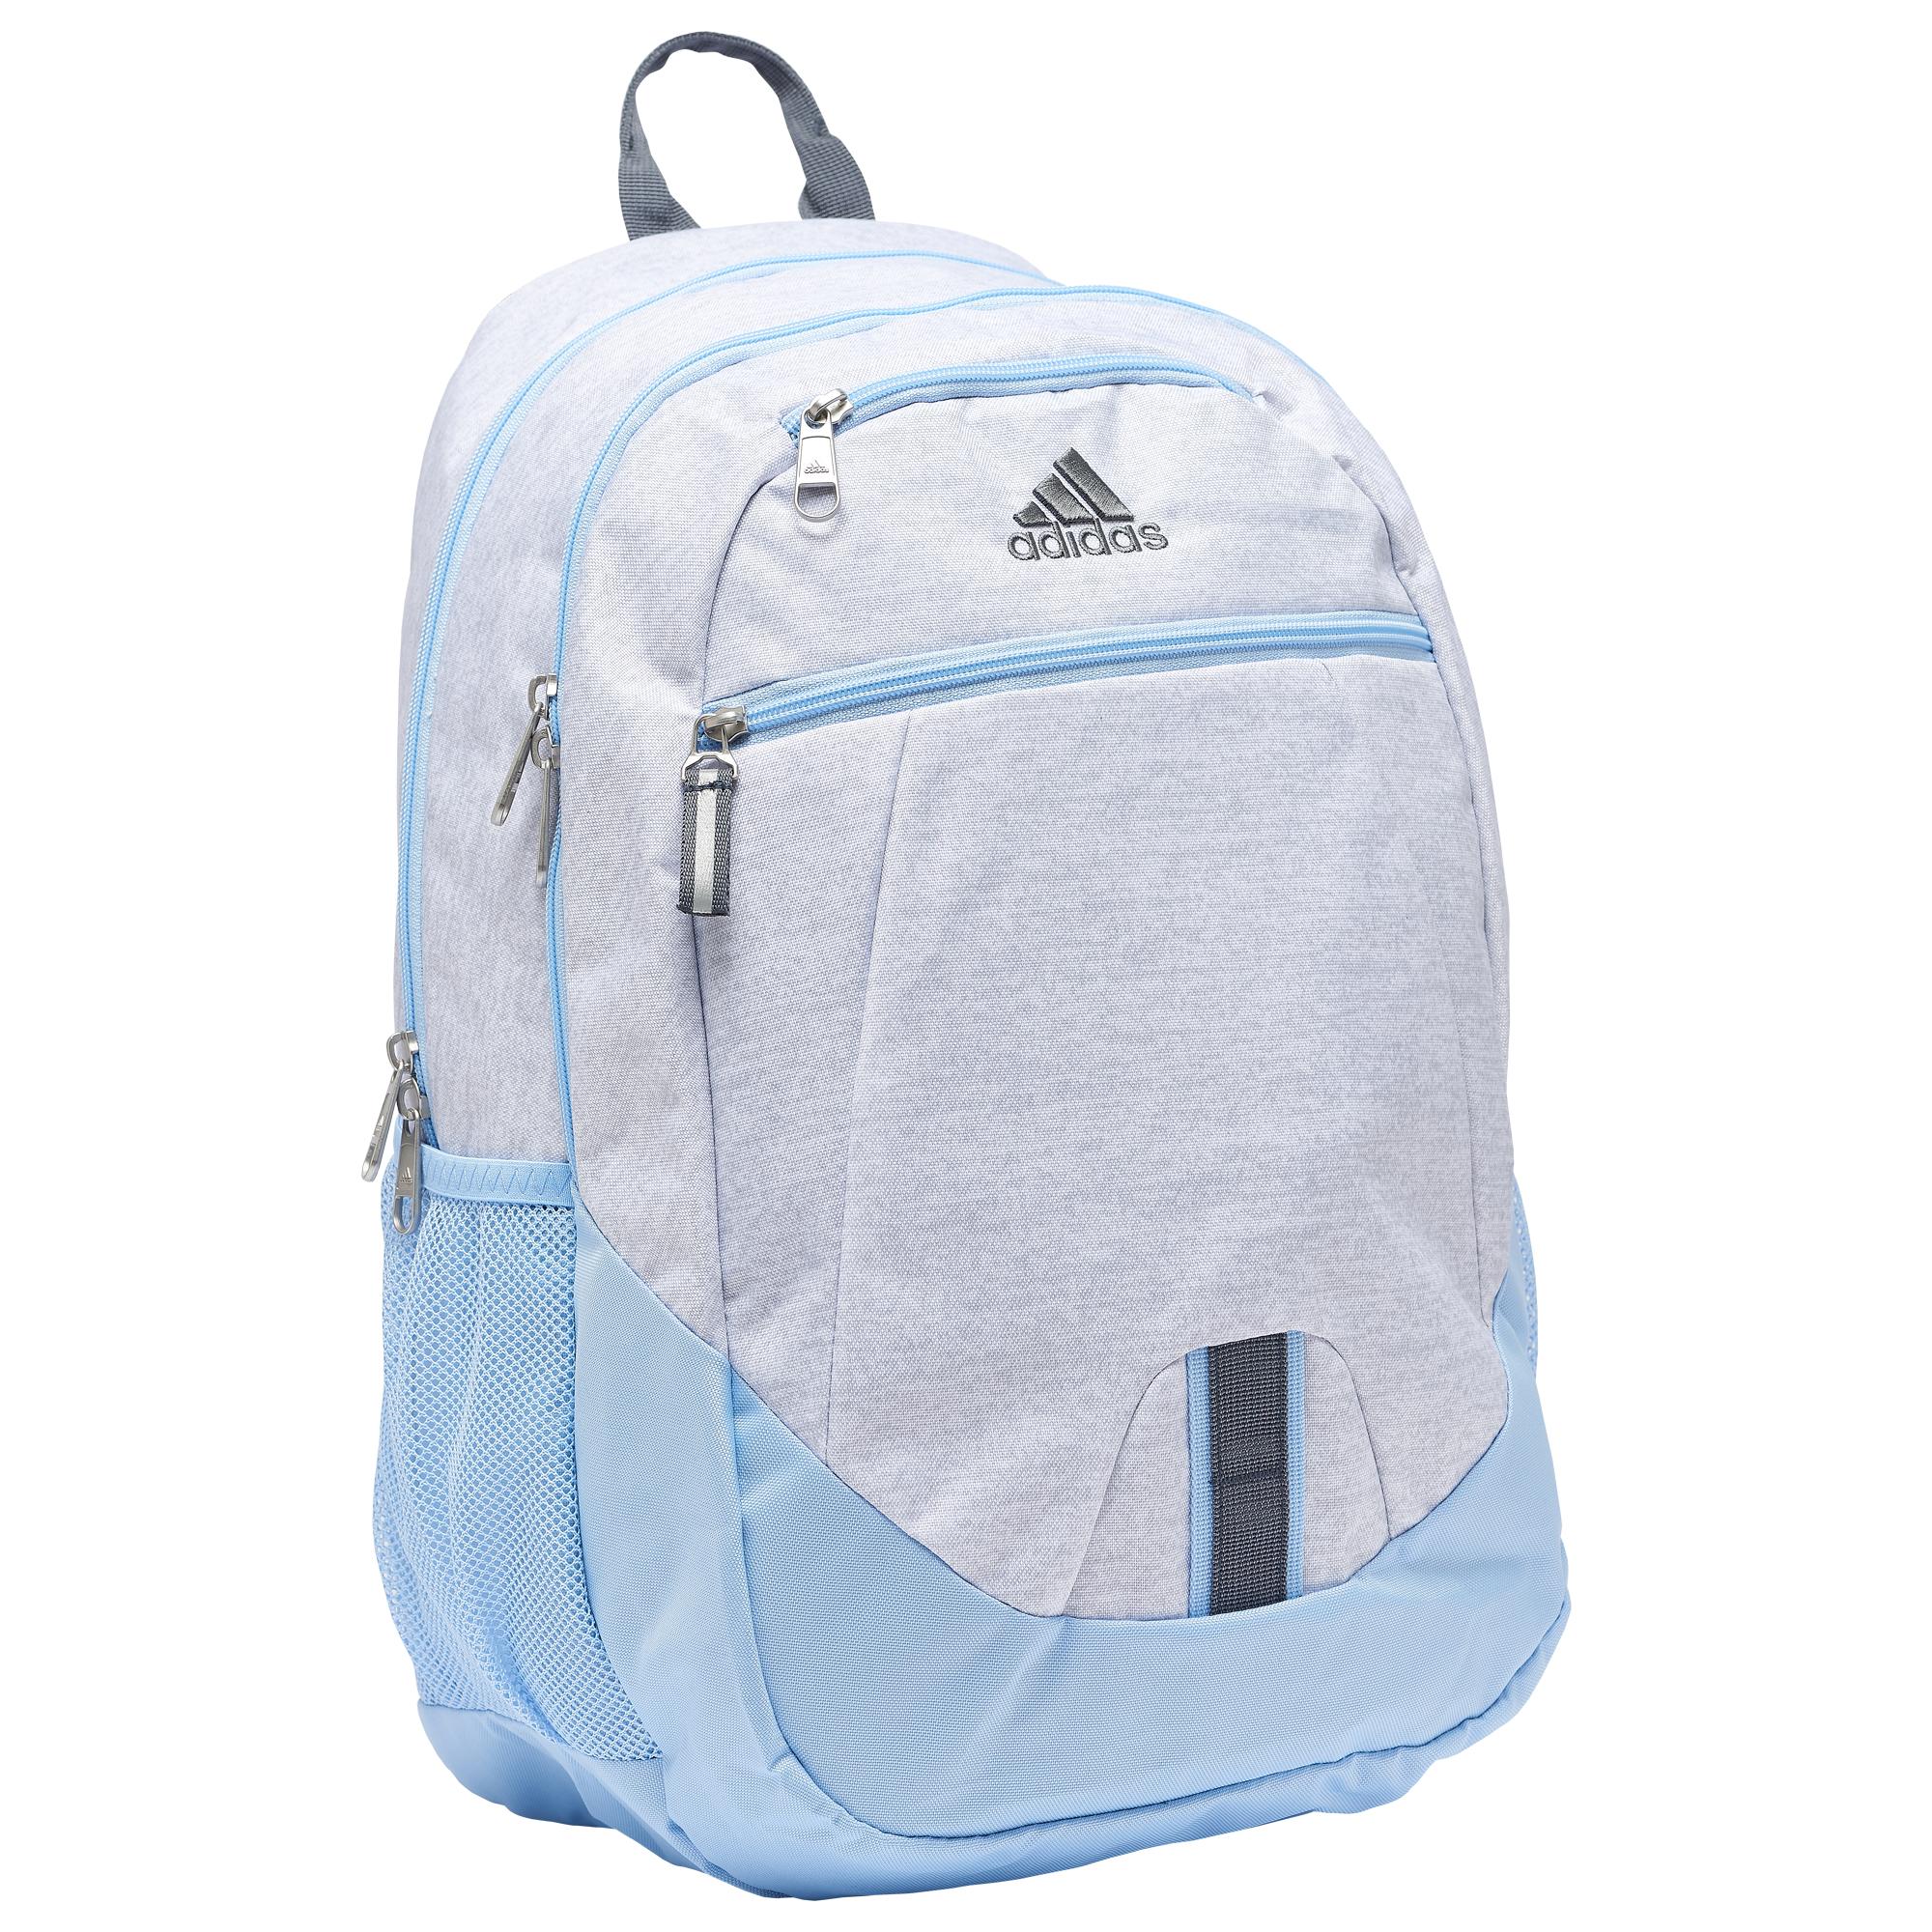 Adidas Foundation V Backpack Discount, 54% OFF | www.ingeniovirtual.com